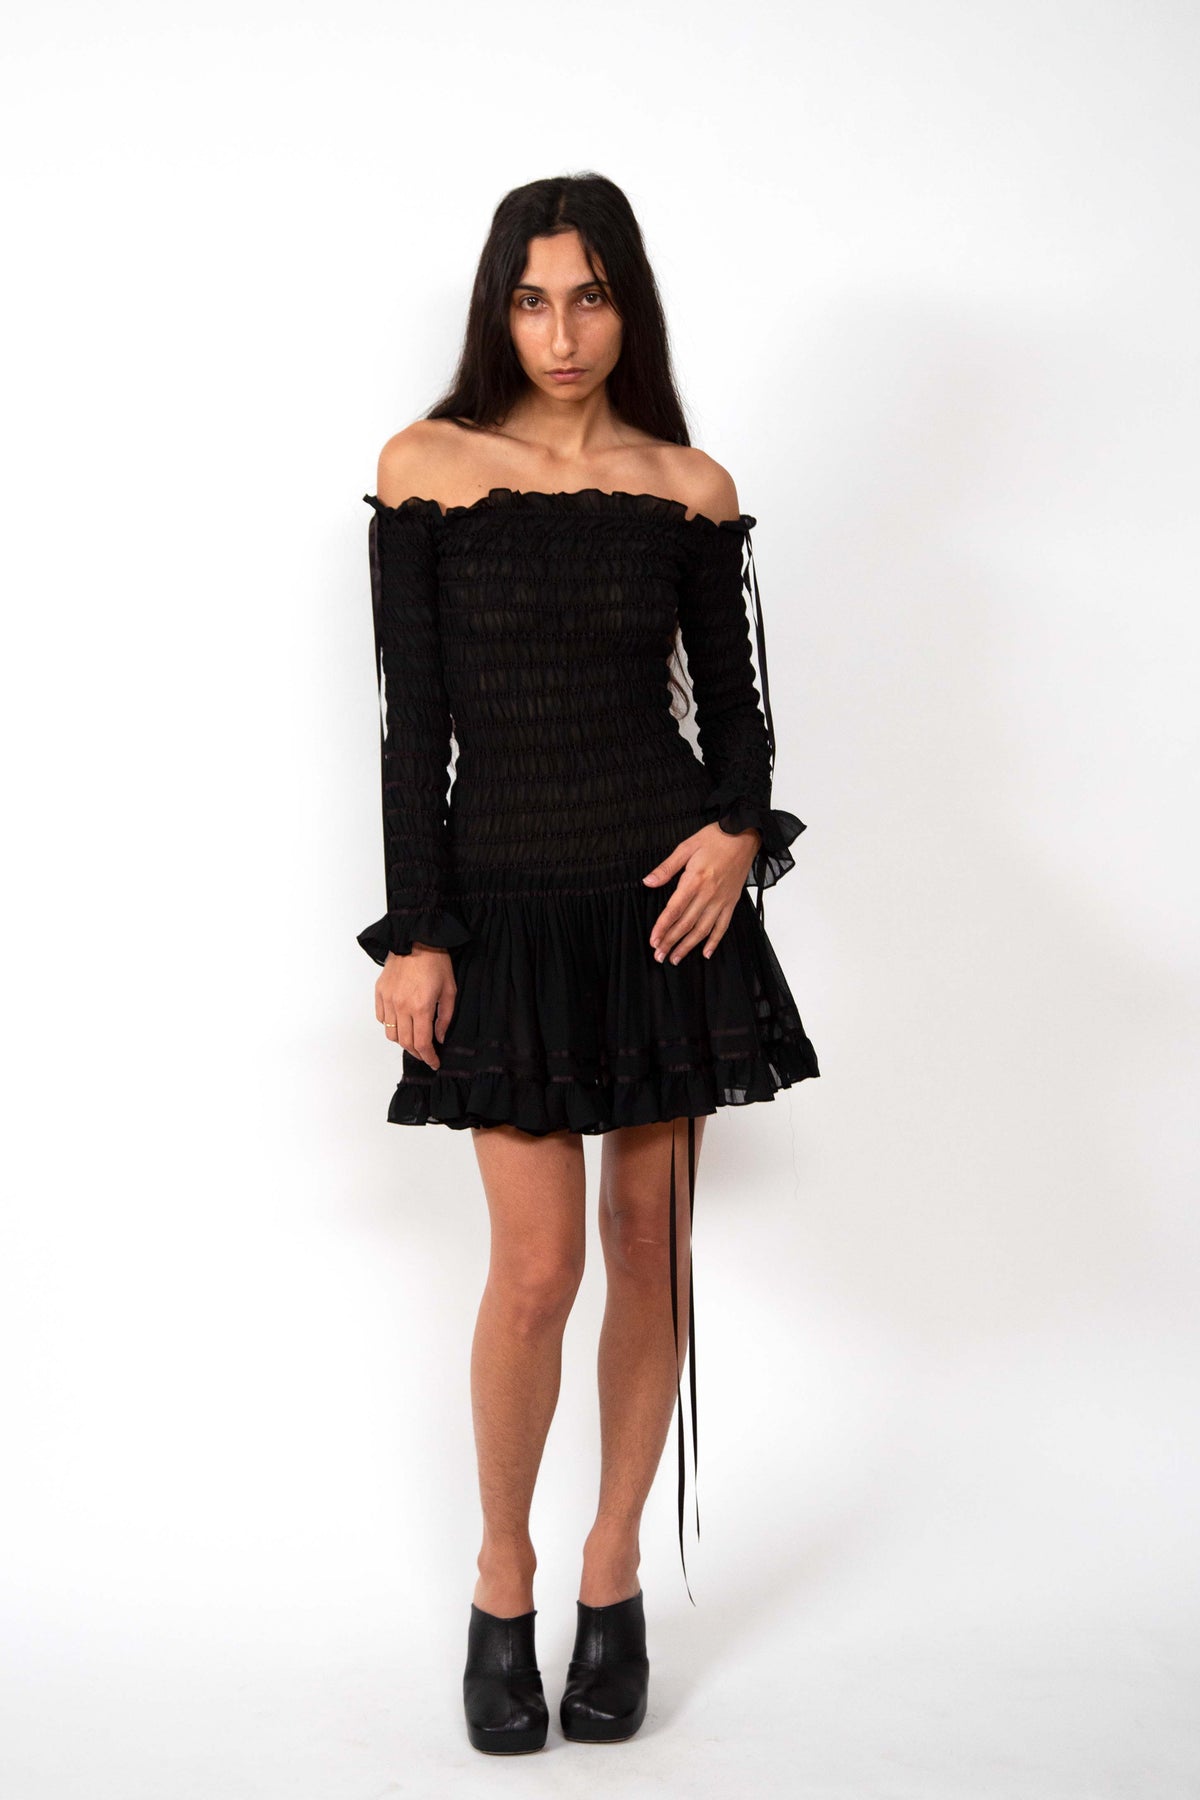 Yves Saint Laurent ruched dress